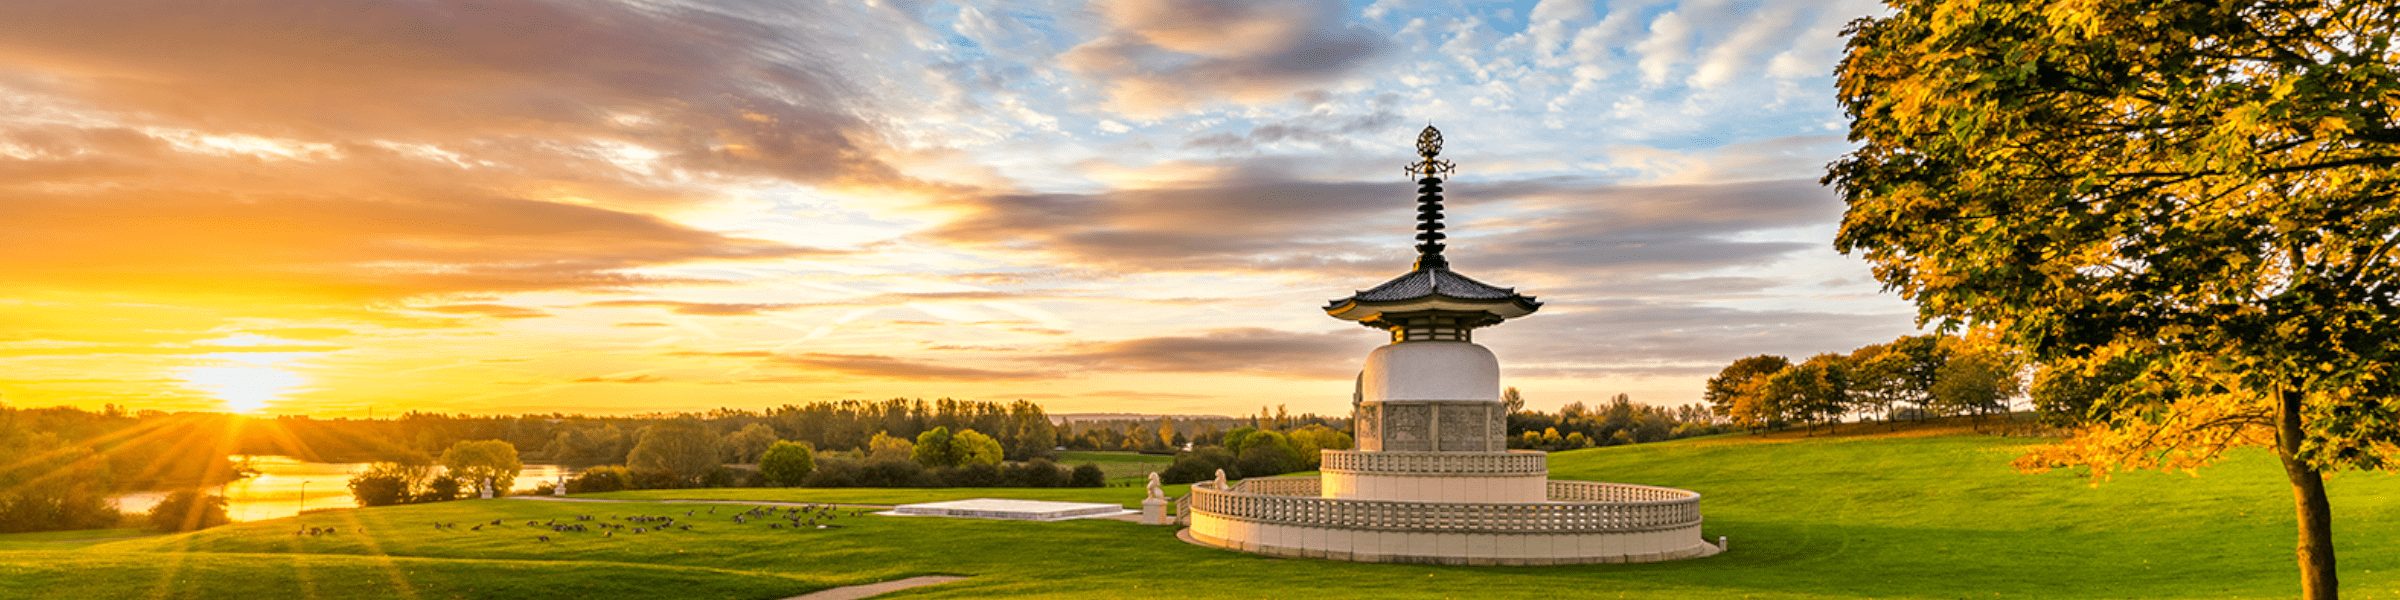 Peace Pagoda in Milton Keynes